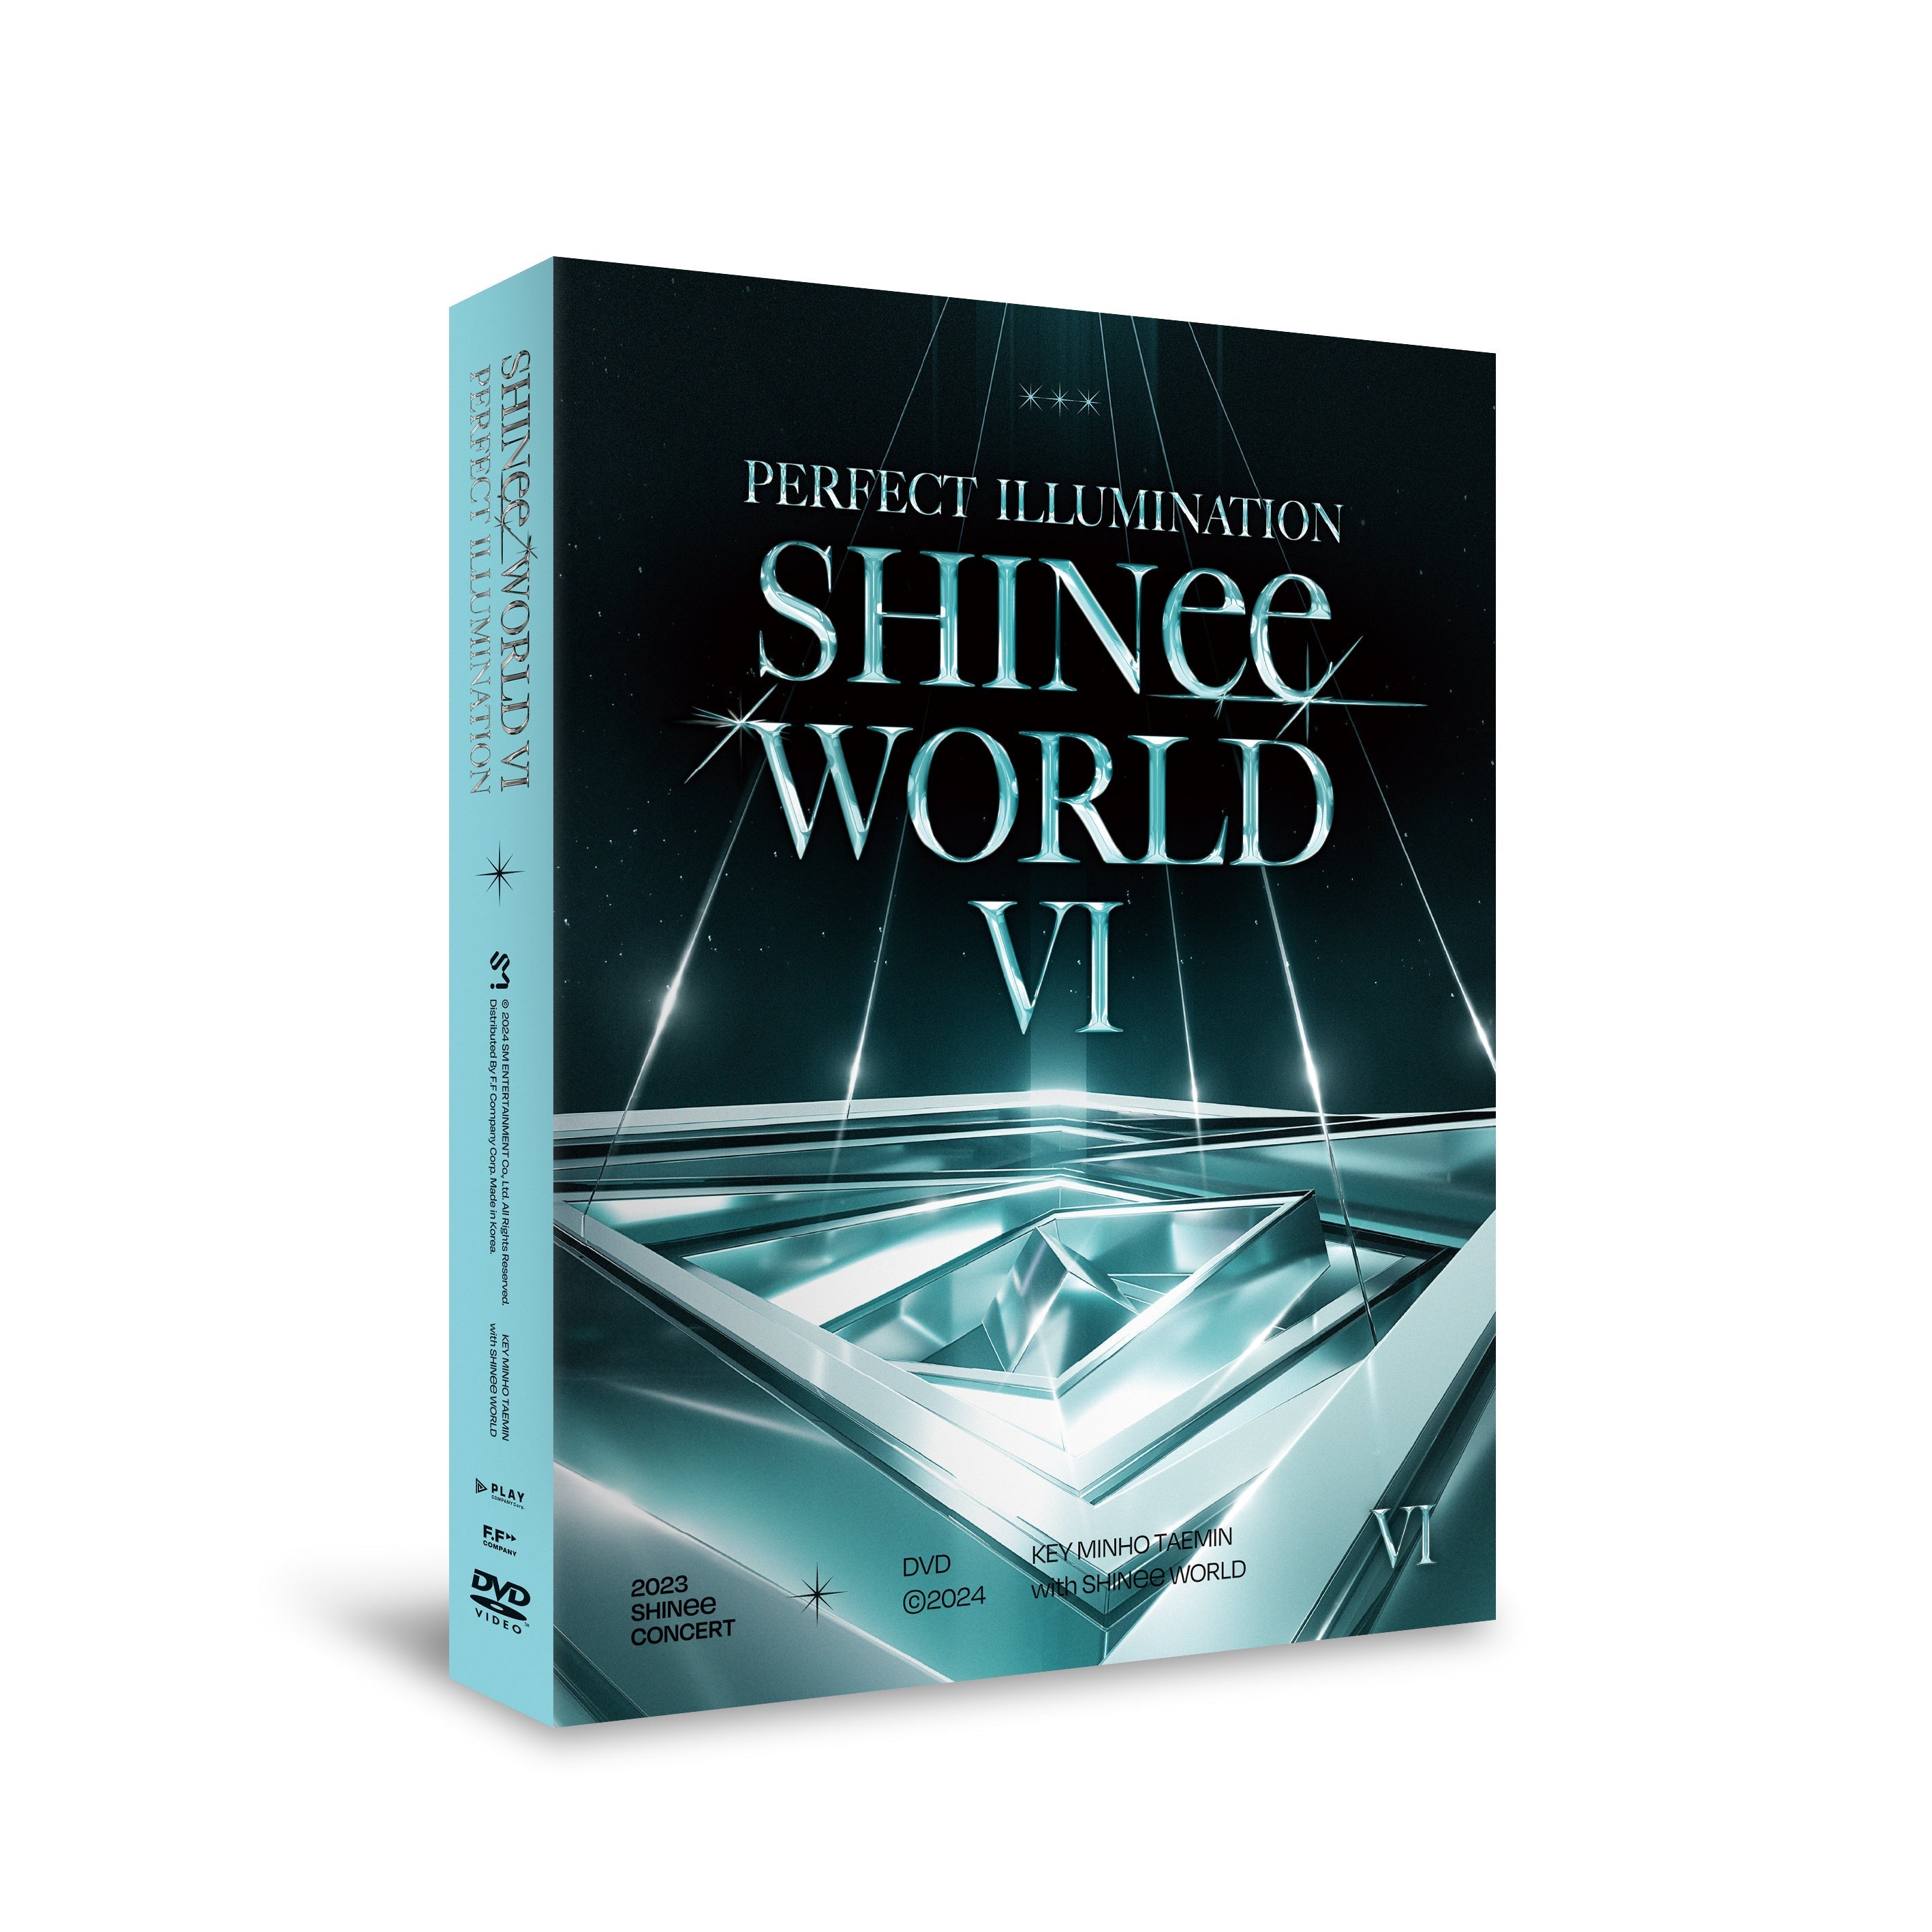 SHINee - SHINee WORLD VI [PERFECT ILLUMINATION] in SEOUL DVD - KPOPHERO